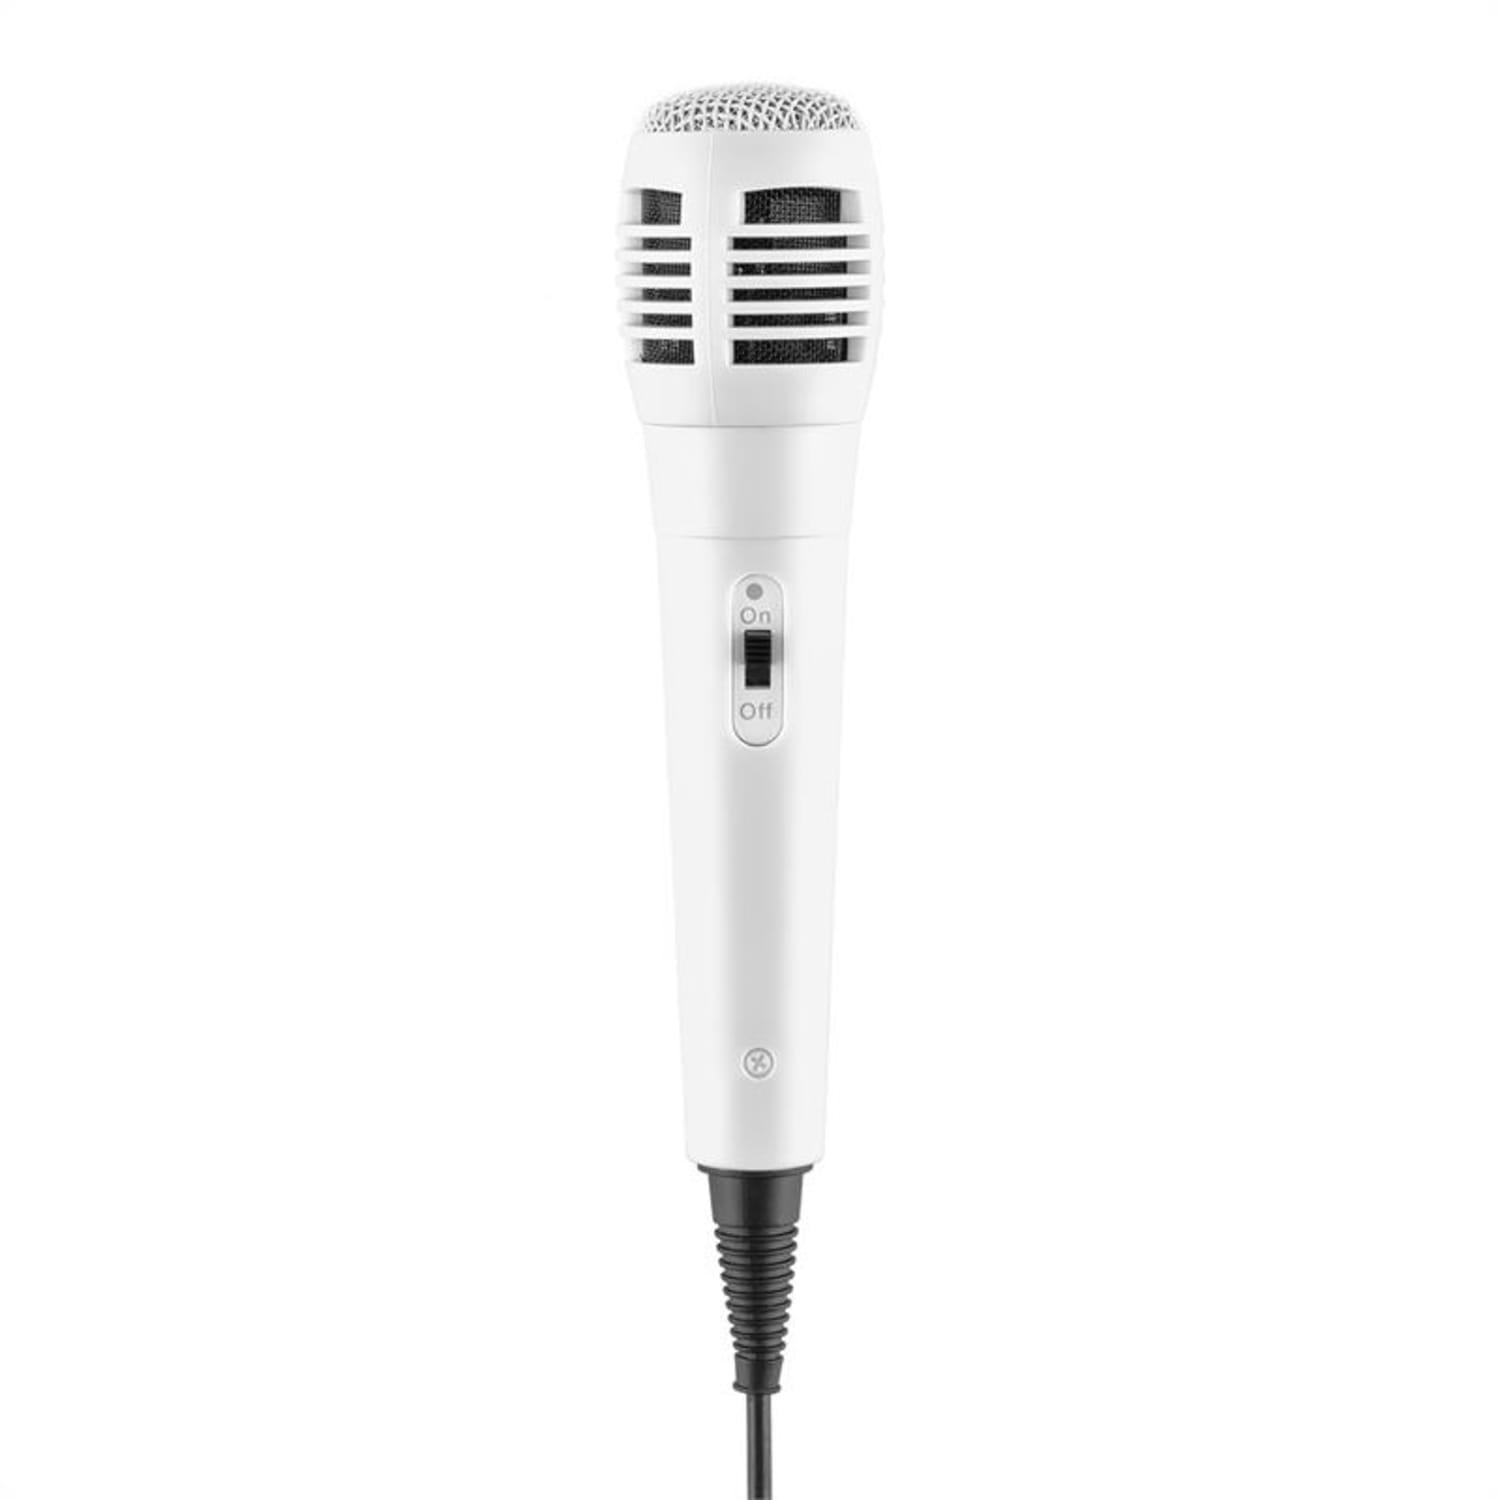 AUNA DiscoFever LED Karaoke-Anlage, Weiß